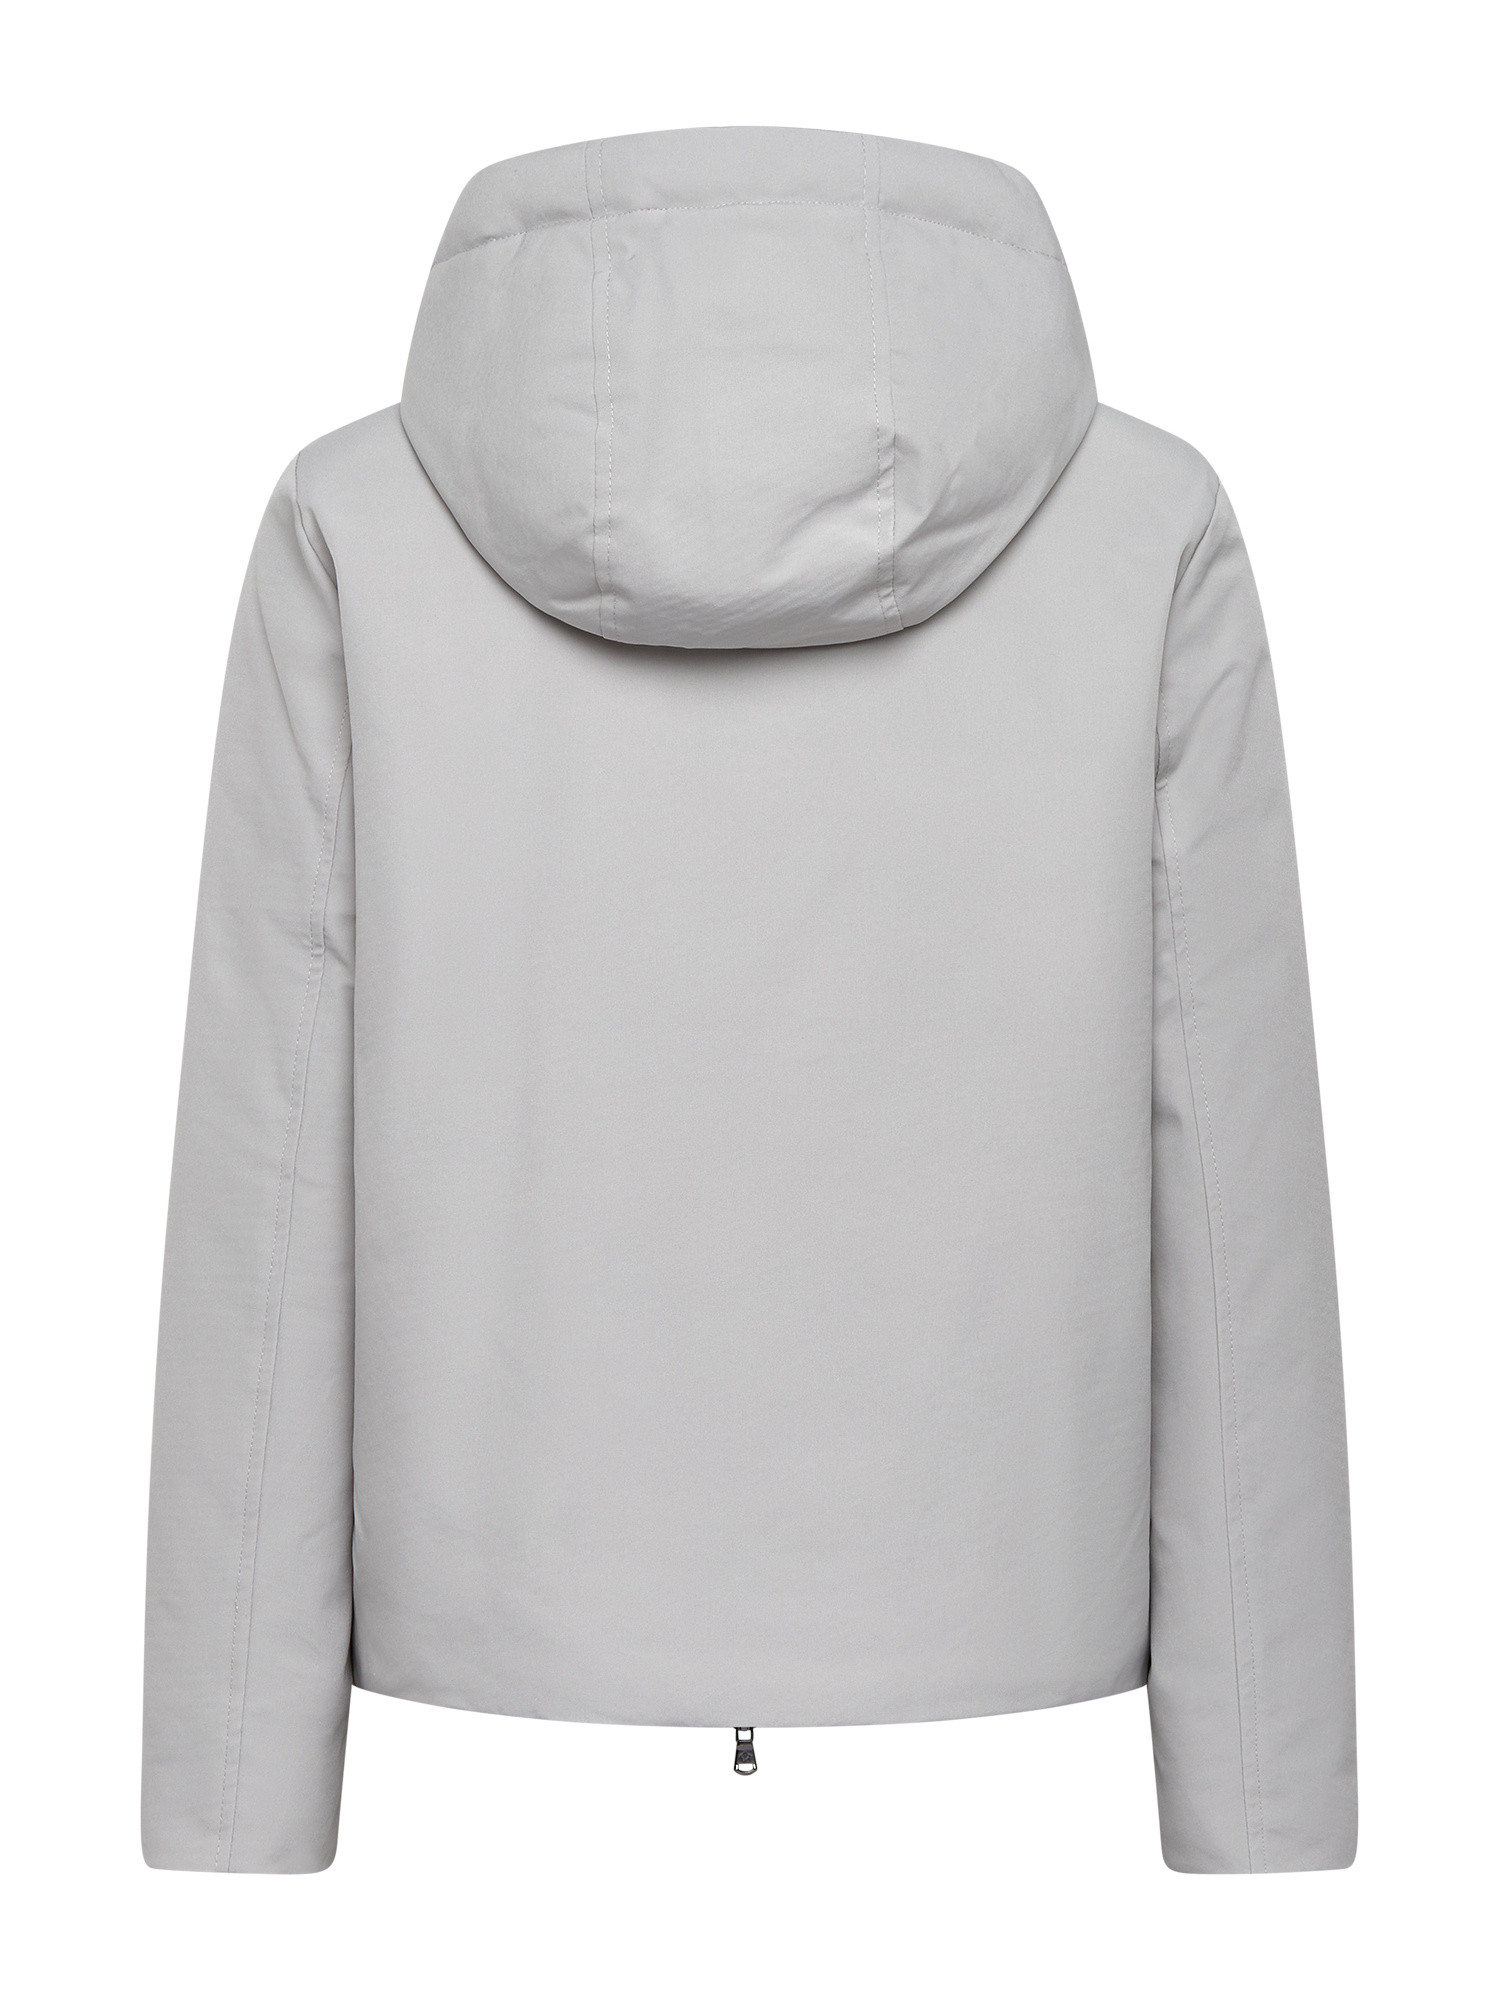 Canadian - Soft zip Jacket, Grigio chiaro, large image number 1